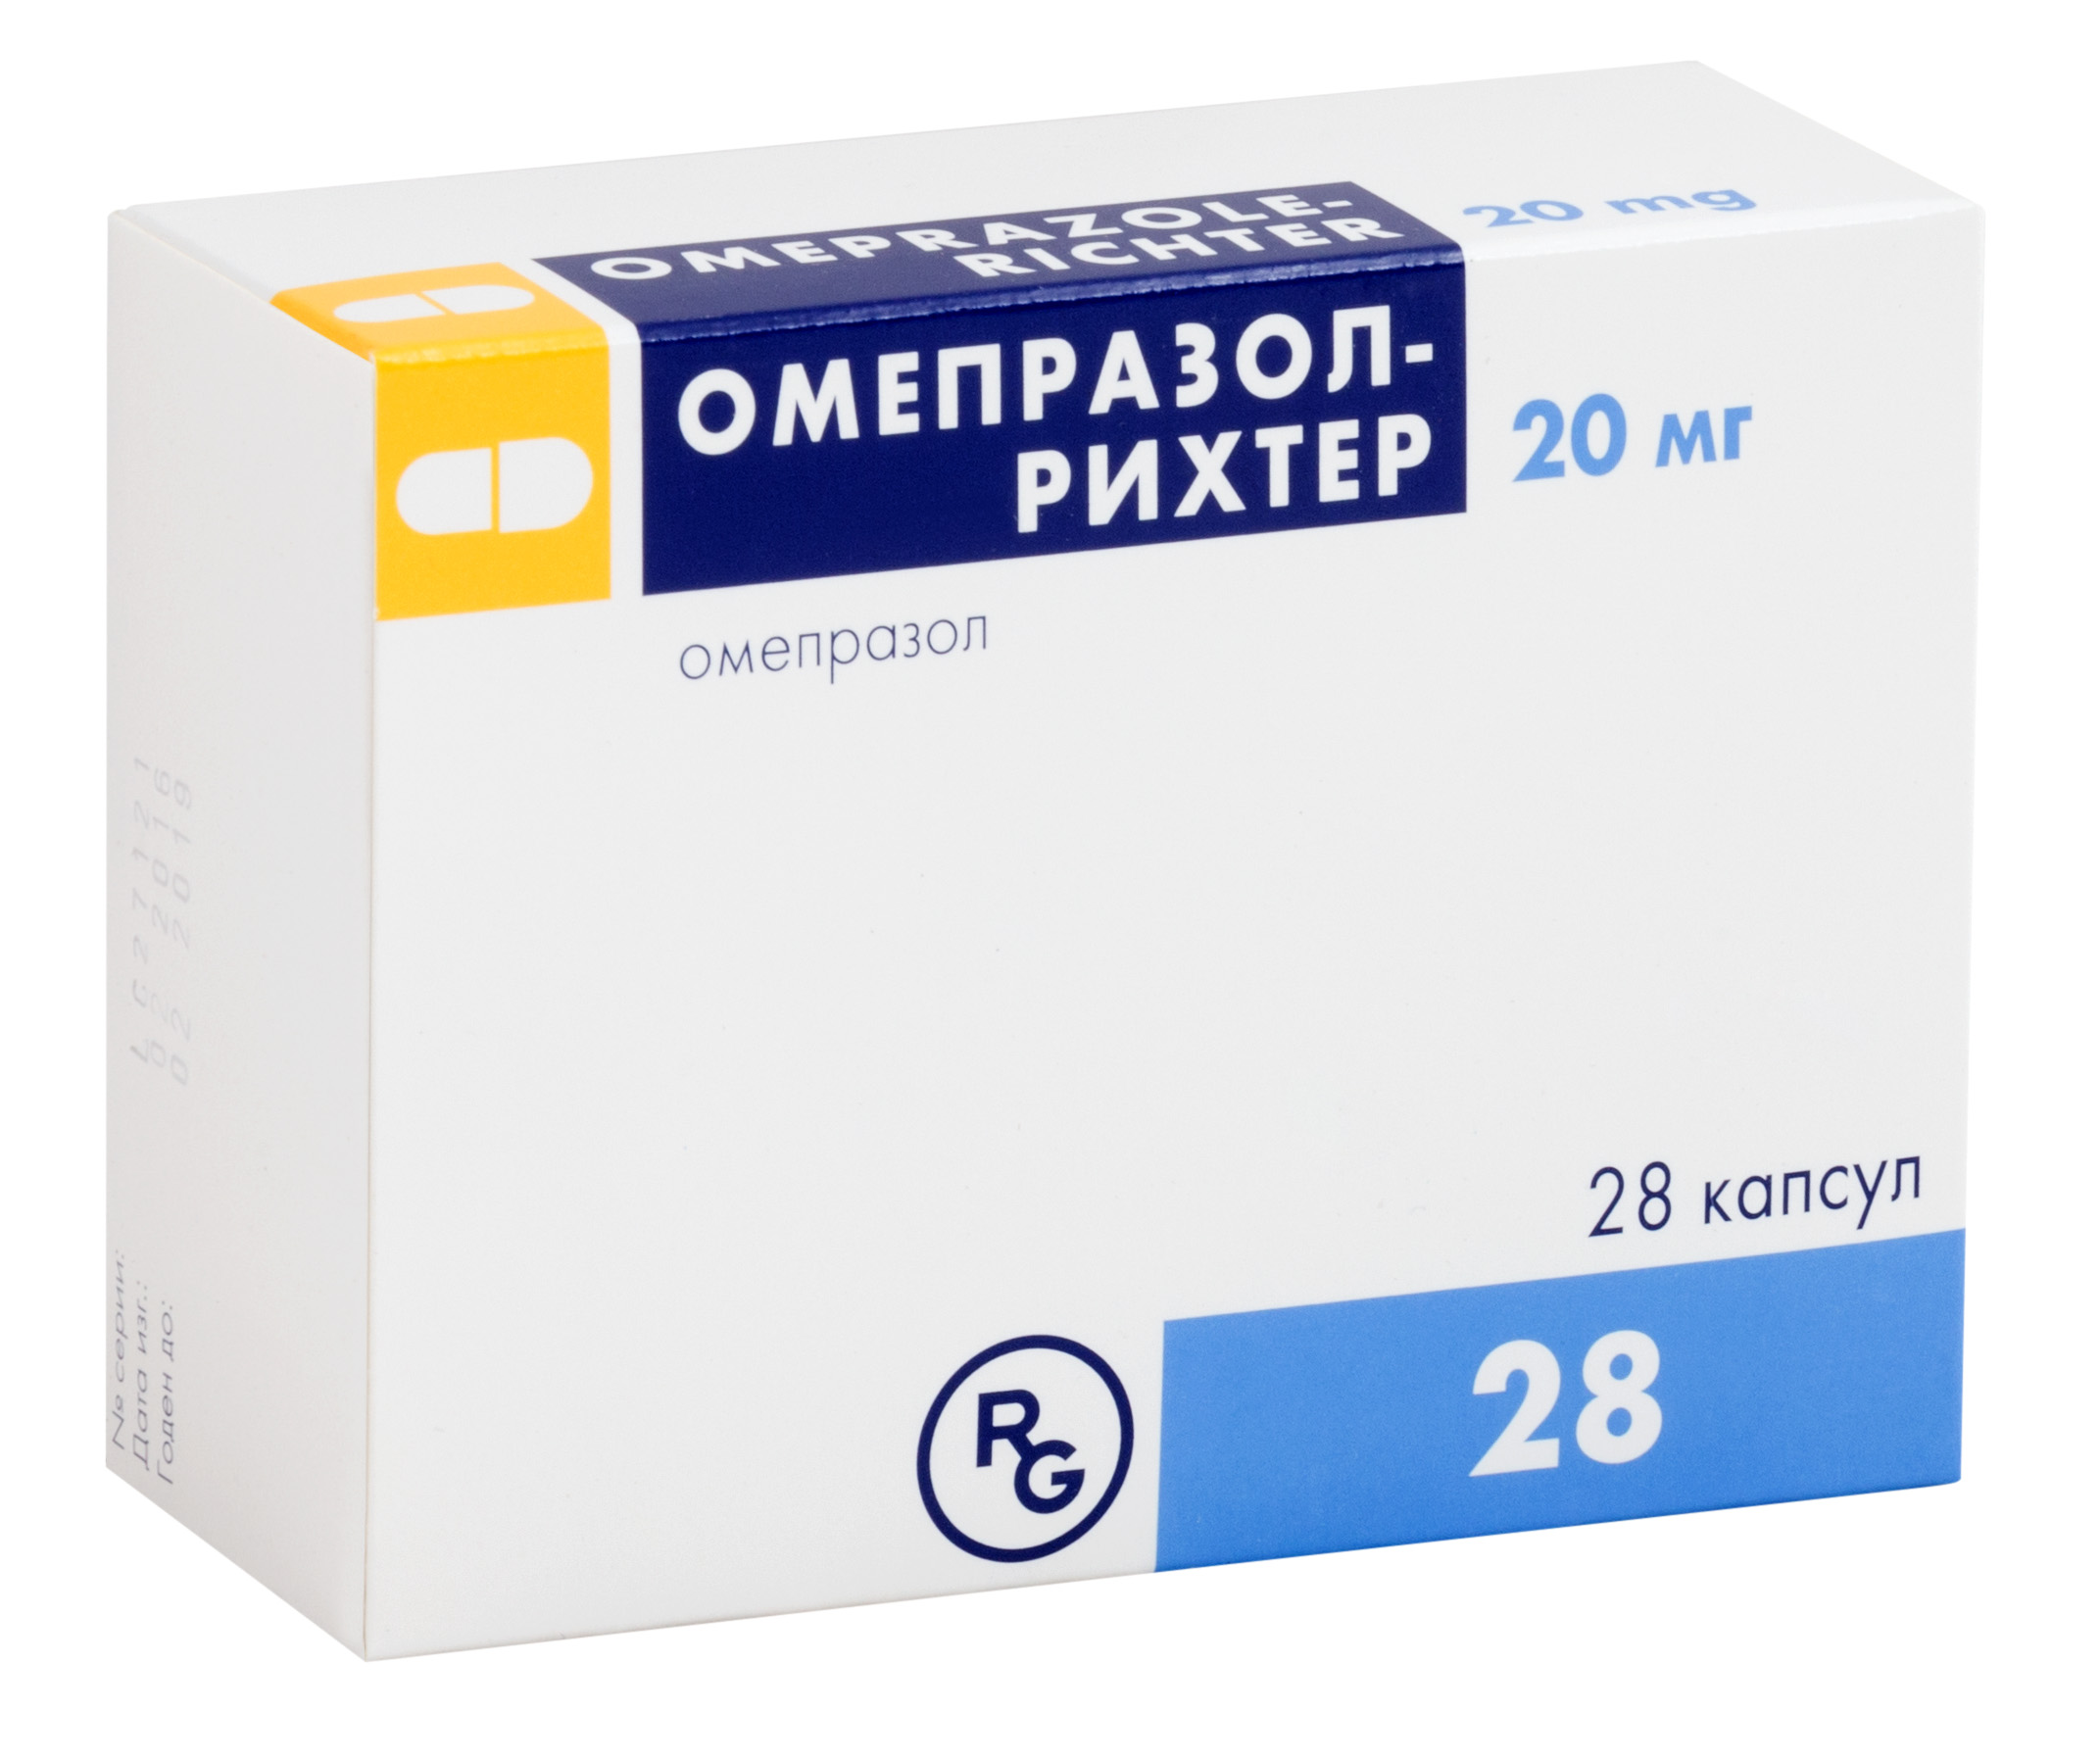 Aptekirls :: Омепразол-Рихтер капс. 20 мг №28 — заказать онлайн и .